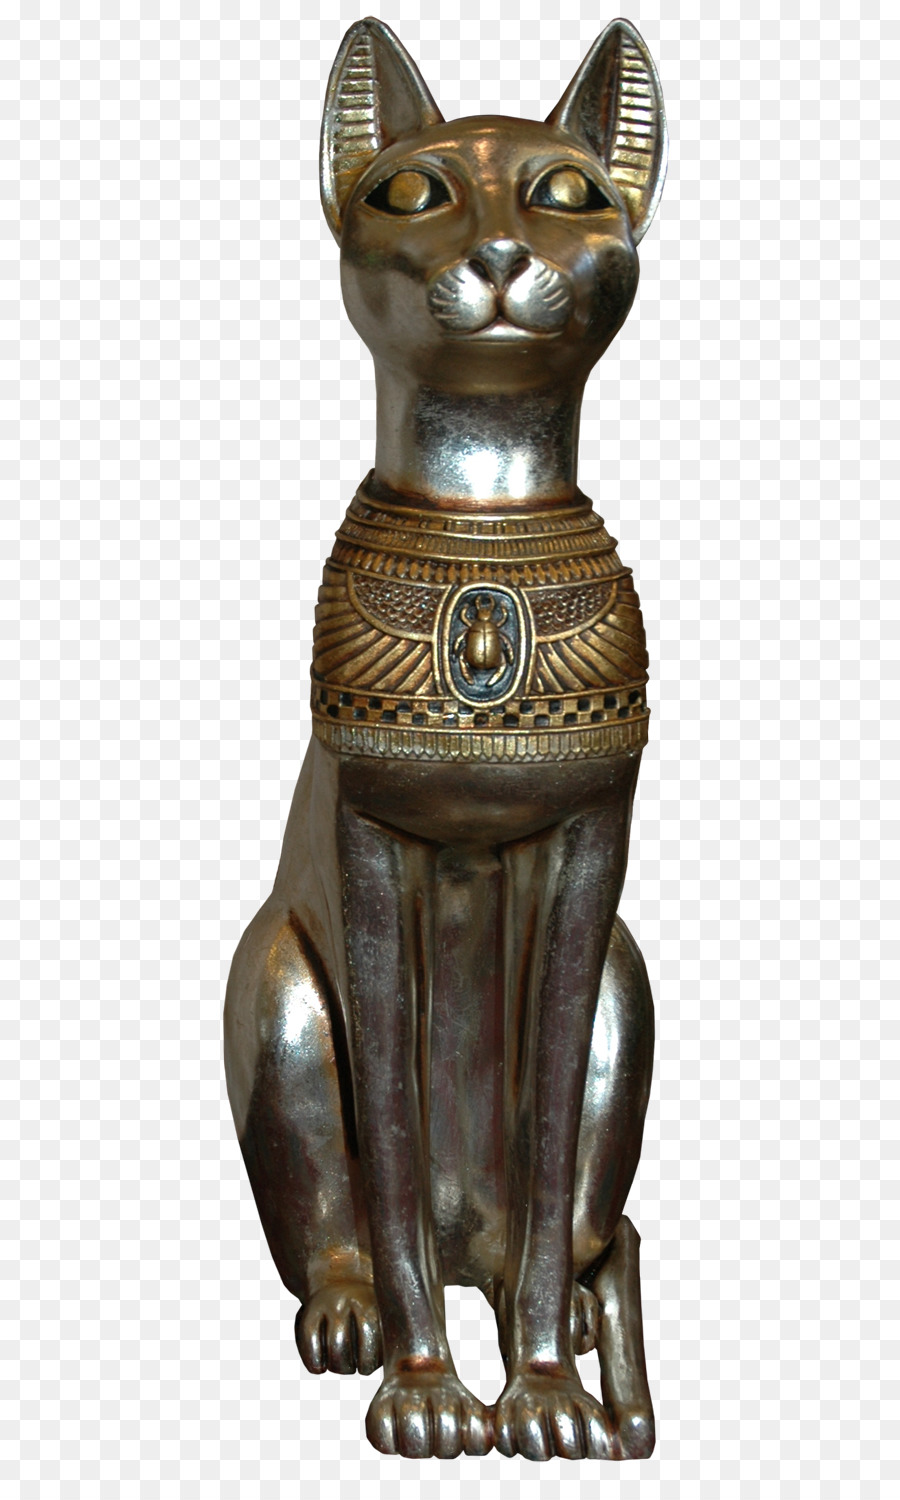 egypt clipart egyptian statue